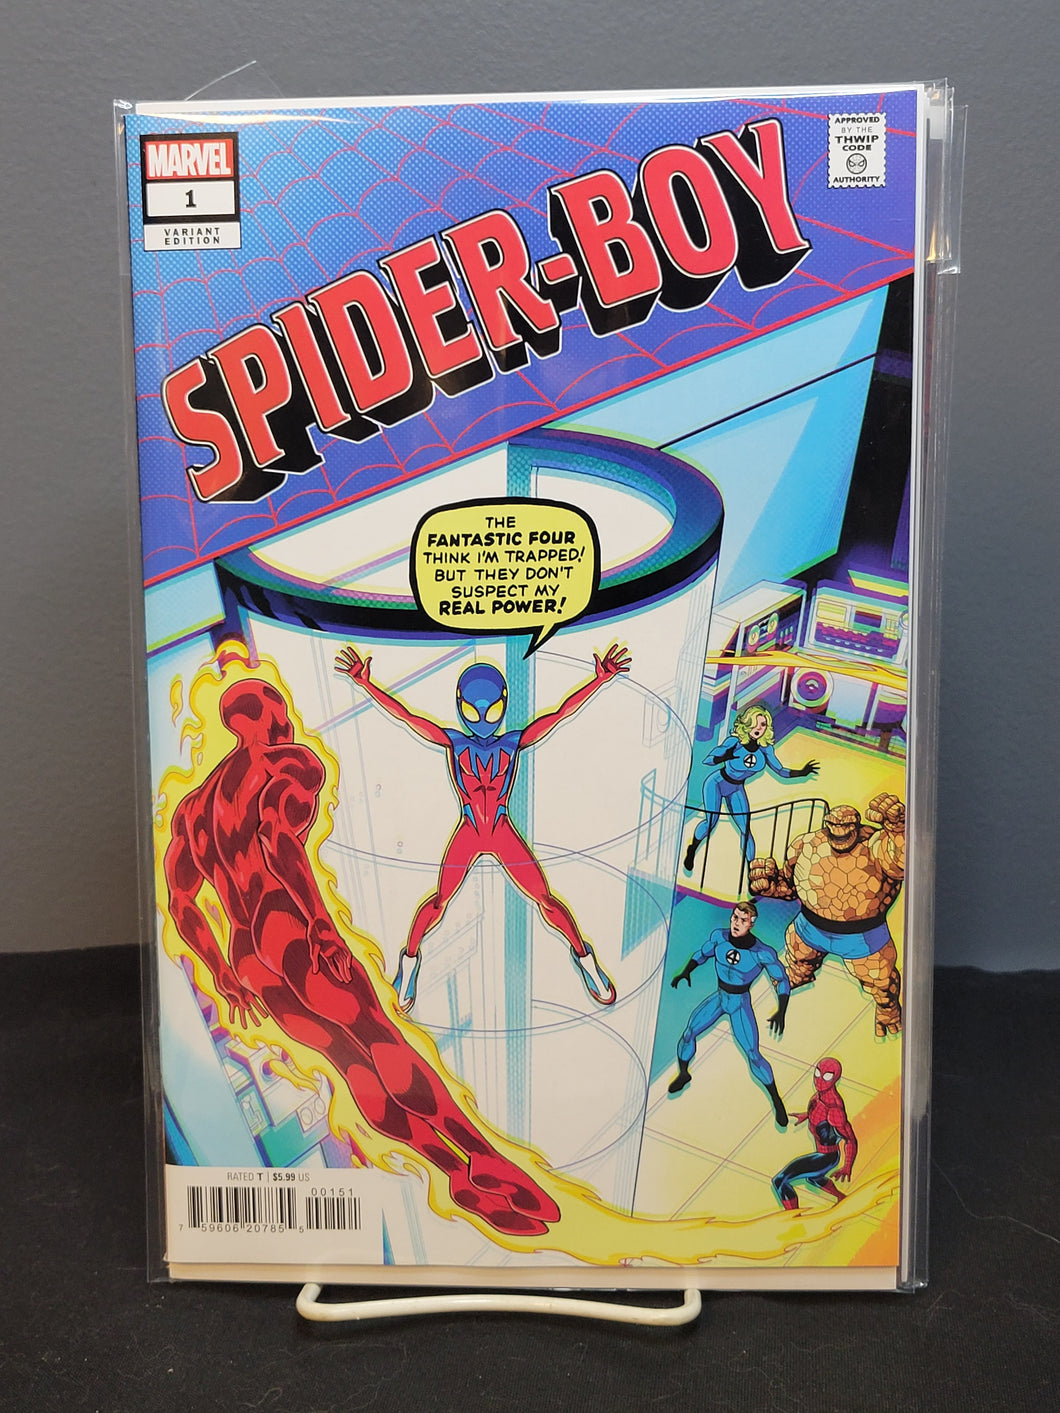 Spider-Boy #1 Homage Variant